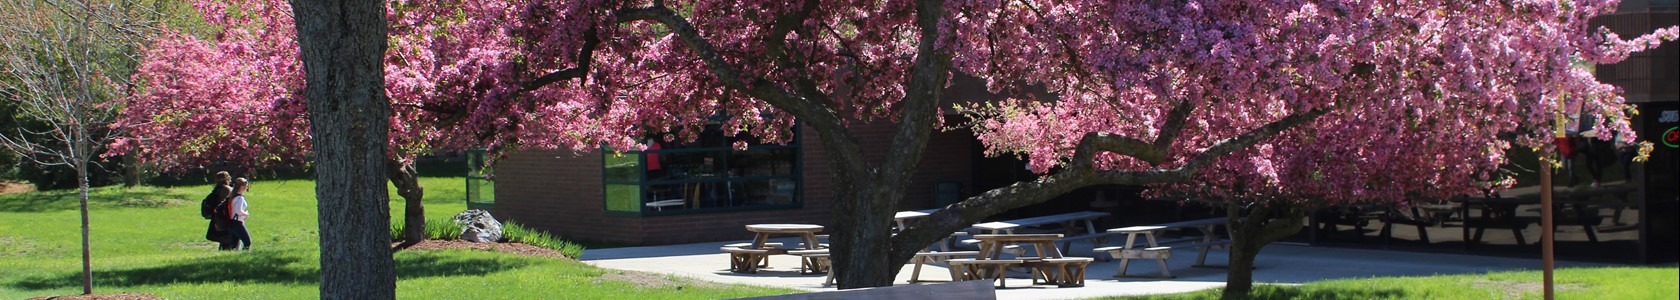 MCC's Sidney campus picnic area